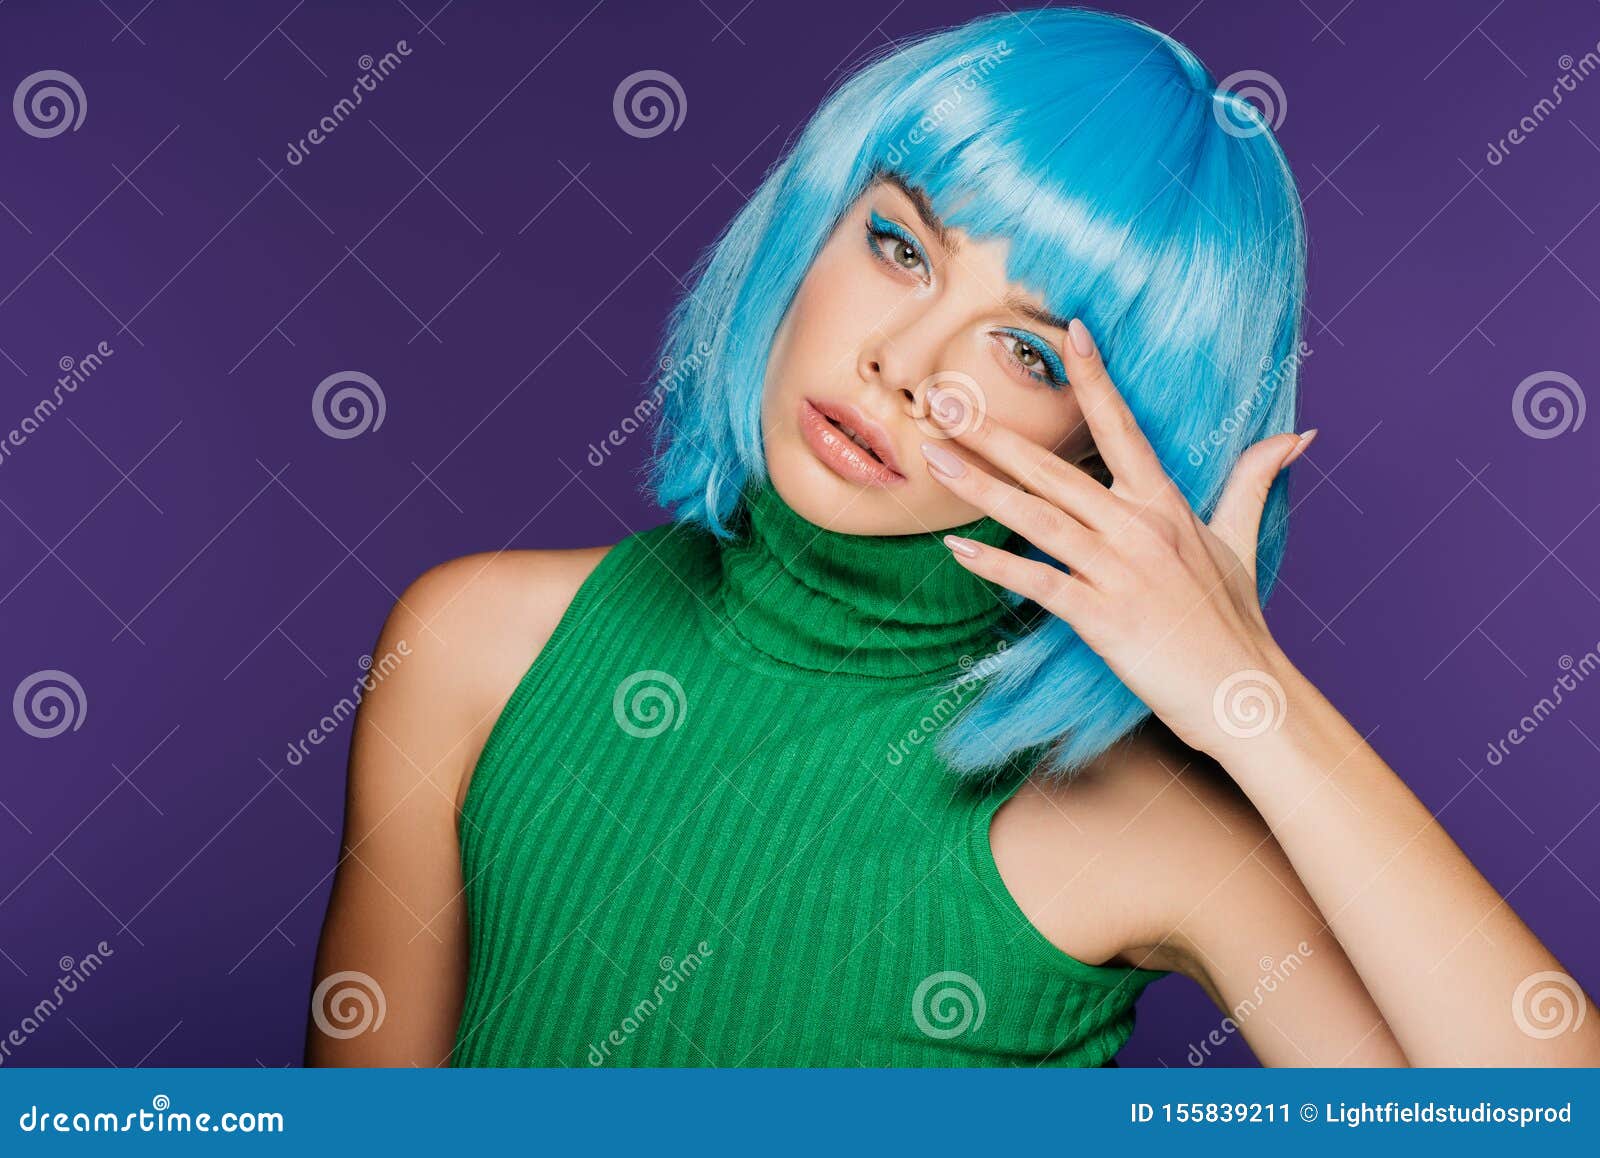 Blue hair alt girl - wide 6